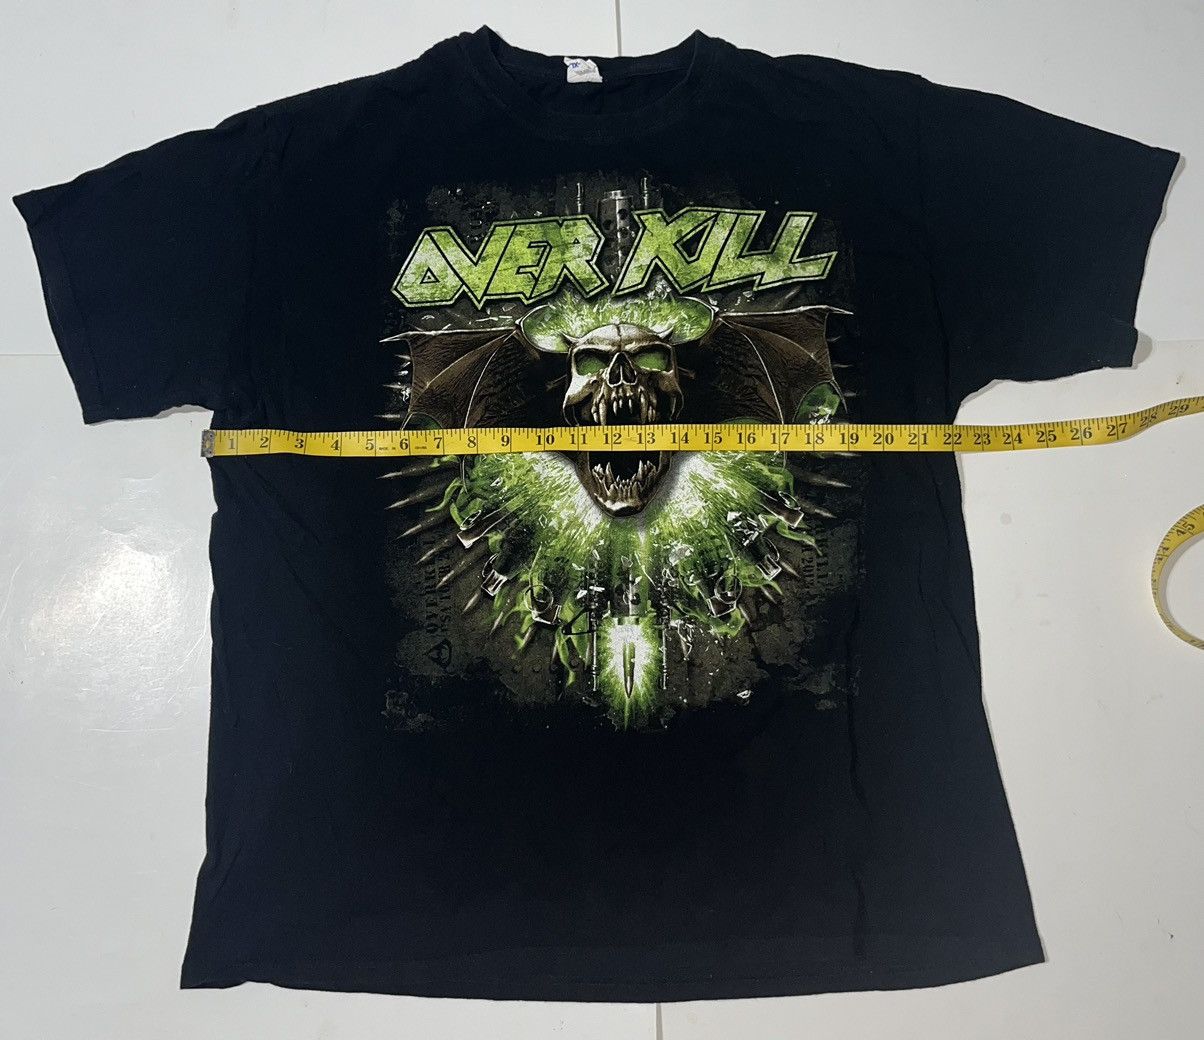 Band Tees Overkill 2013 Official Tour Shirt Size US XL / EU 56 / 4 - 3 Thumbnail